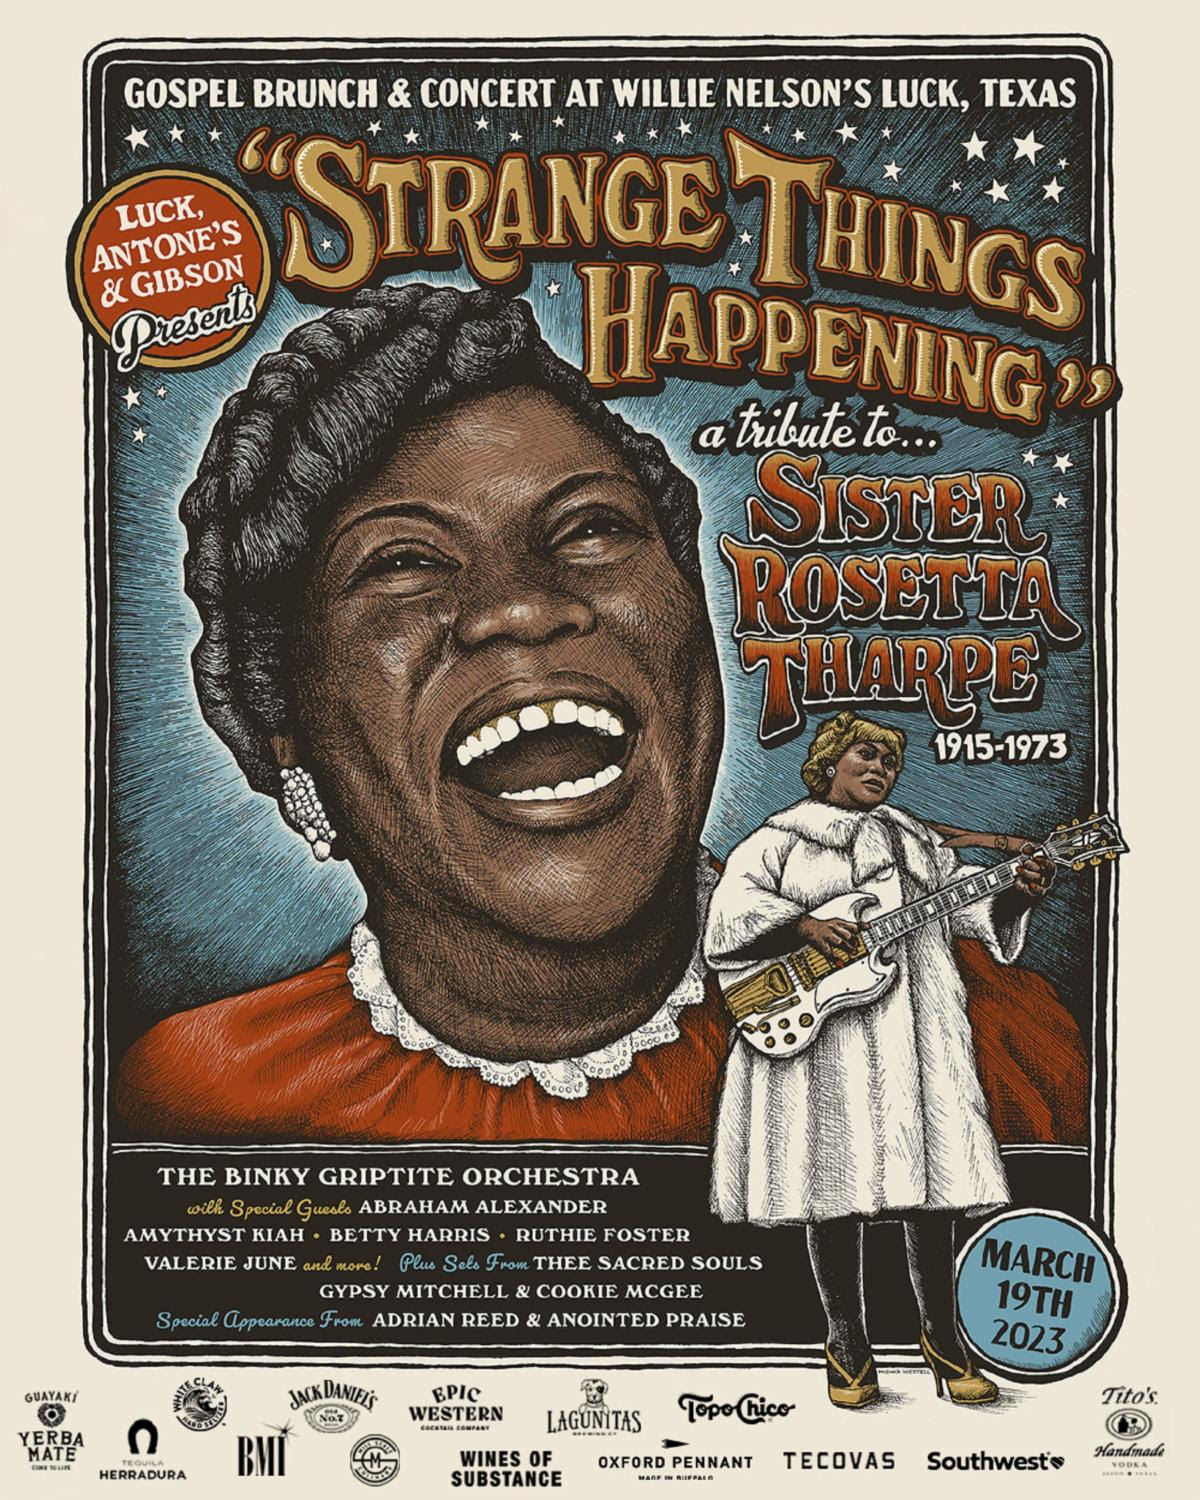 “Strange Things Happening: A Tribute to Sister Rosetta Tharpe” poster art by Mishka Westell.